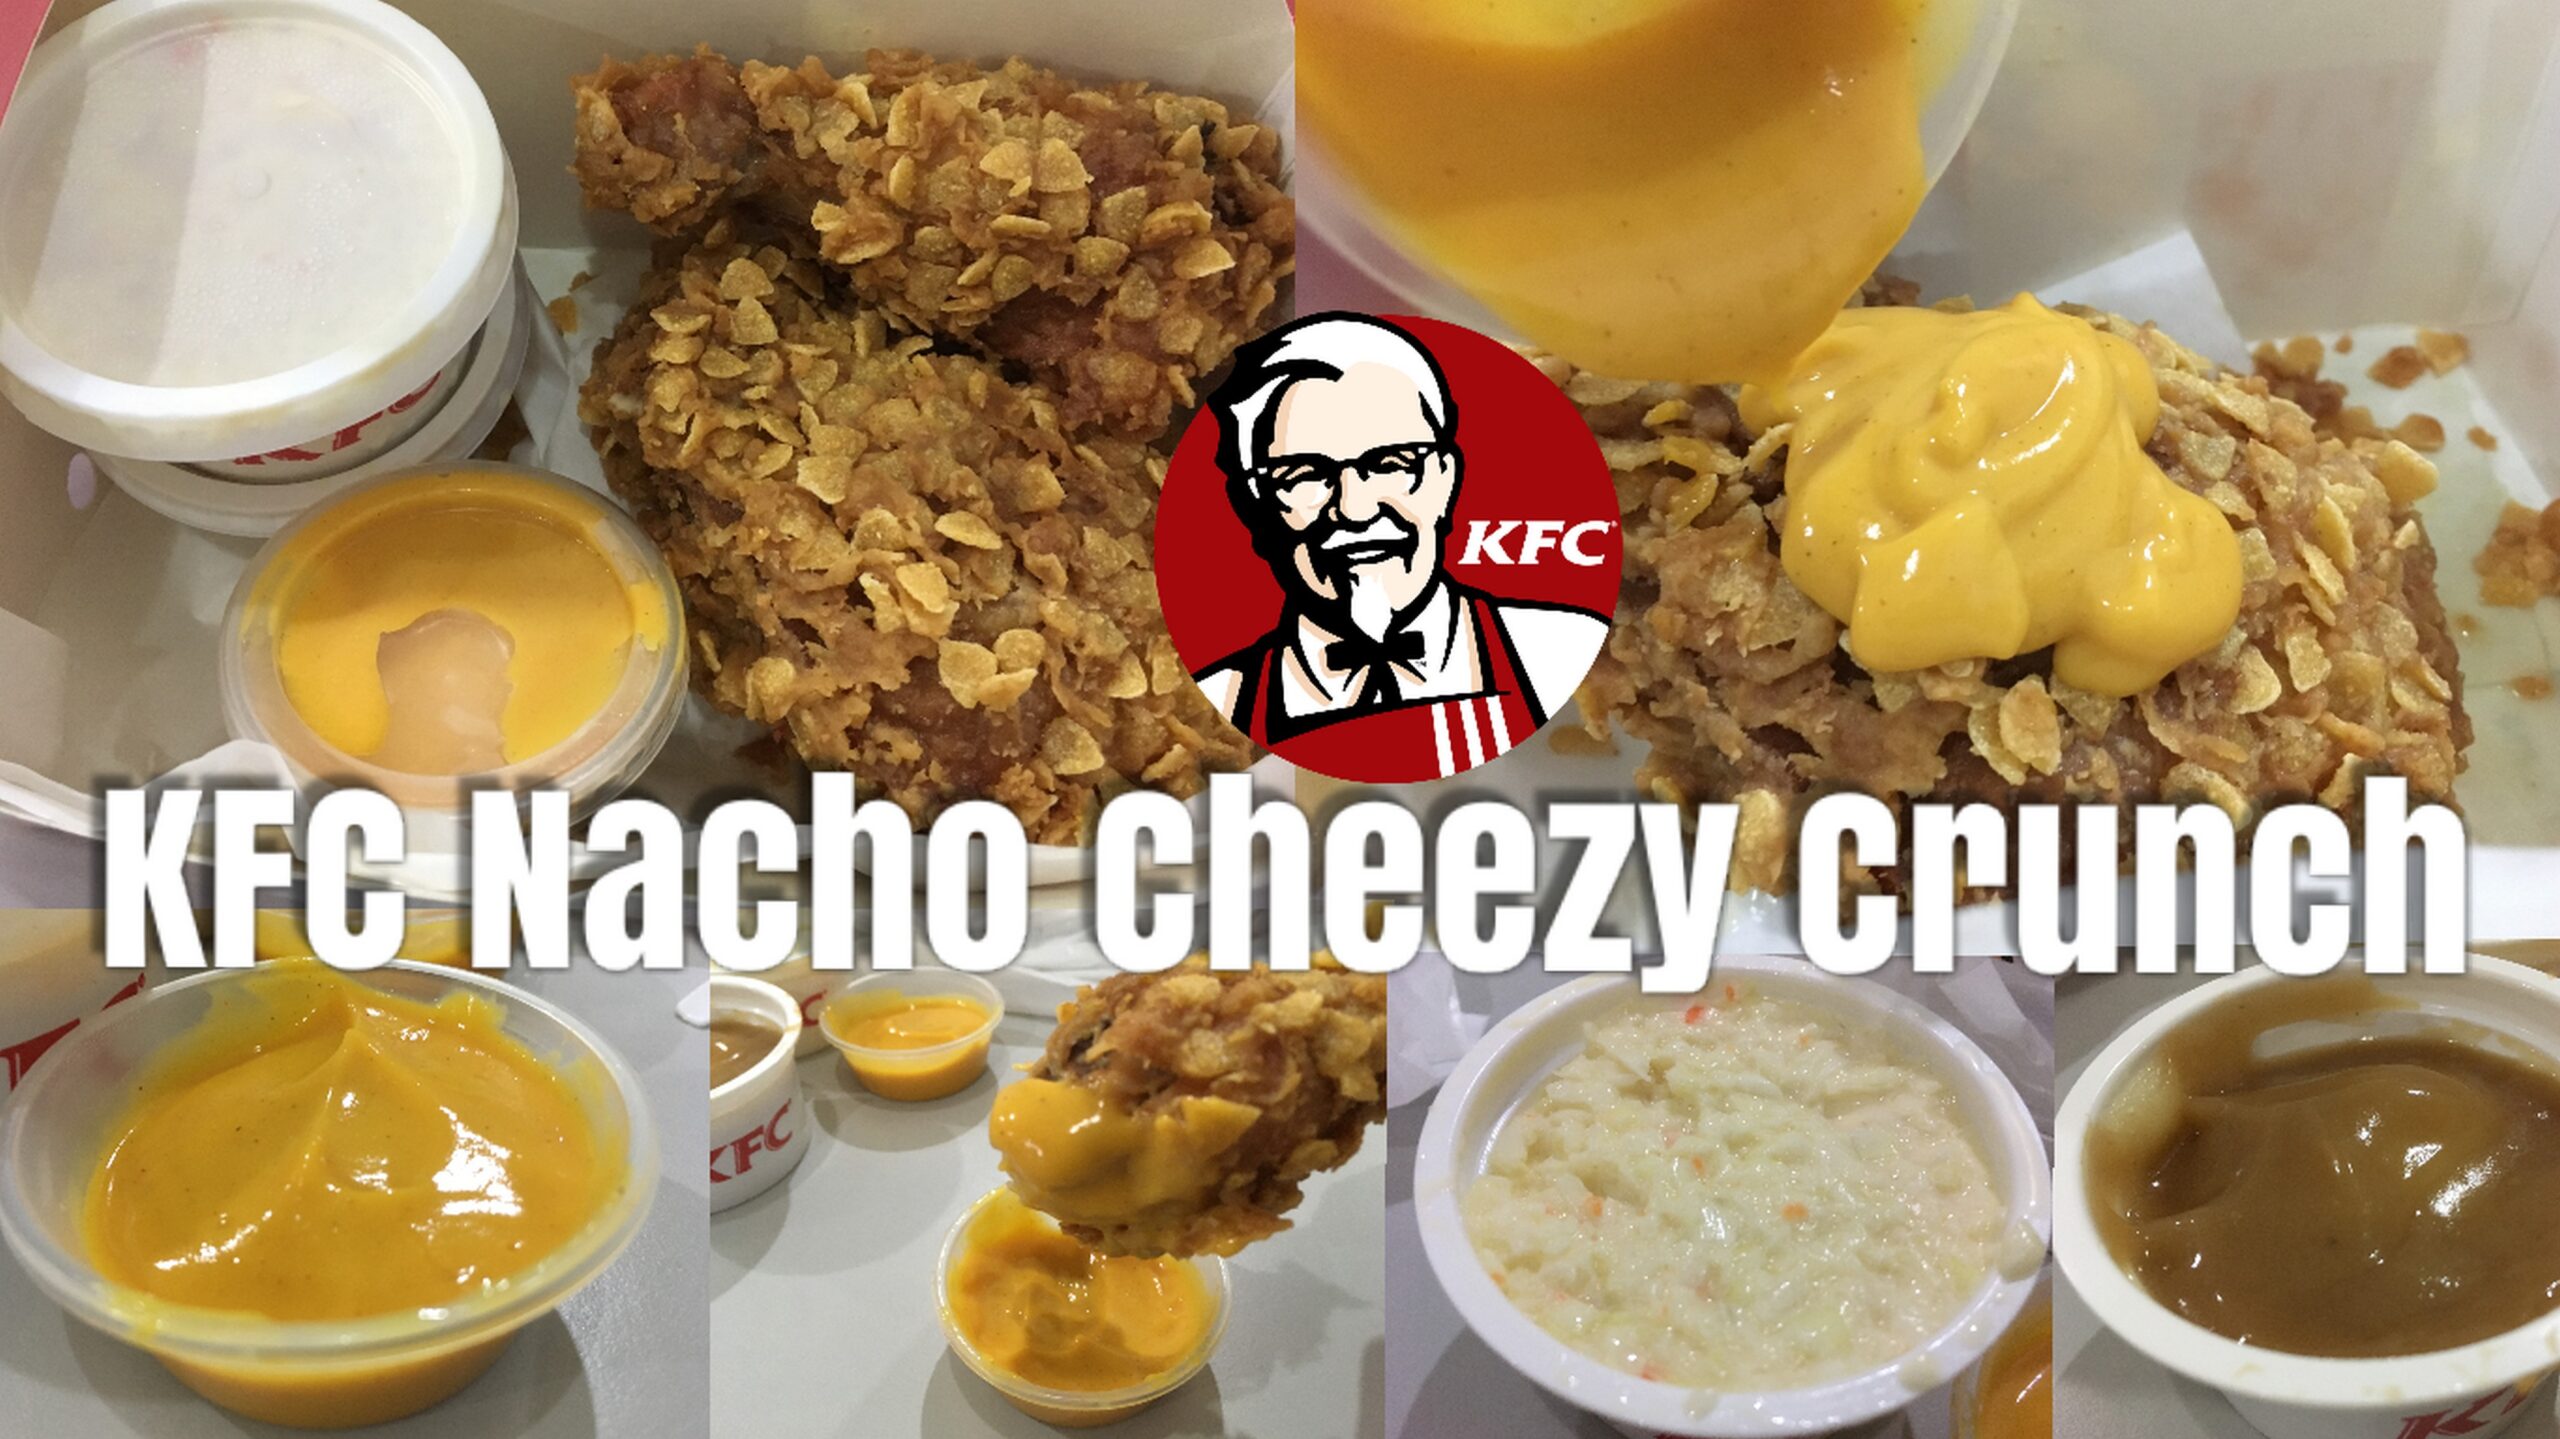 Tasty KFC Nacho Cheezy Crunch with Jalapeno Cheese Sauce